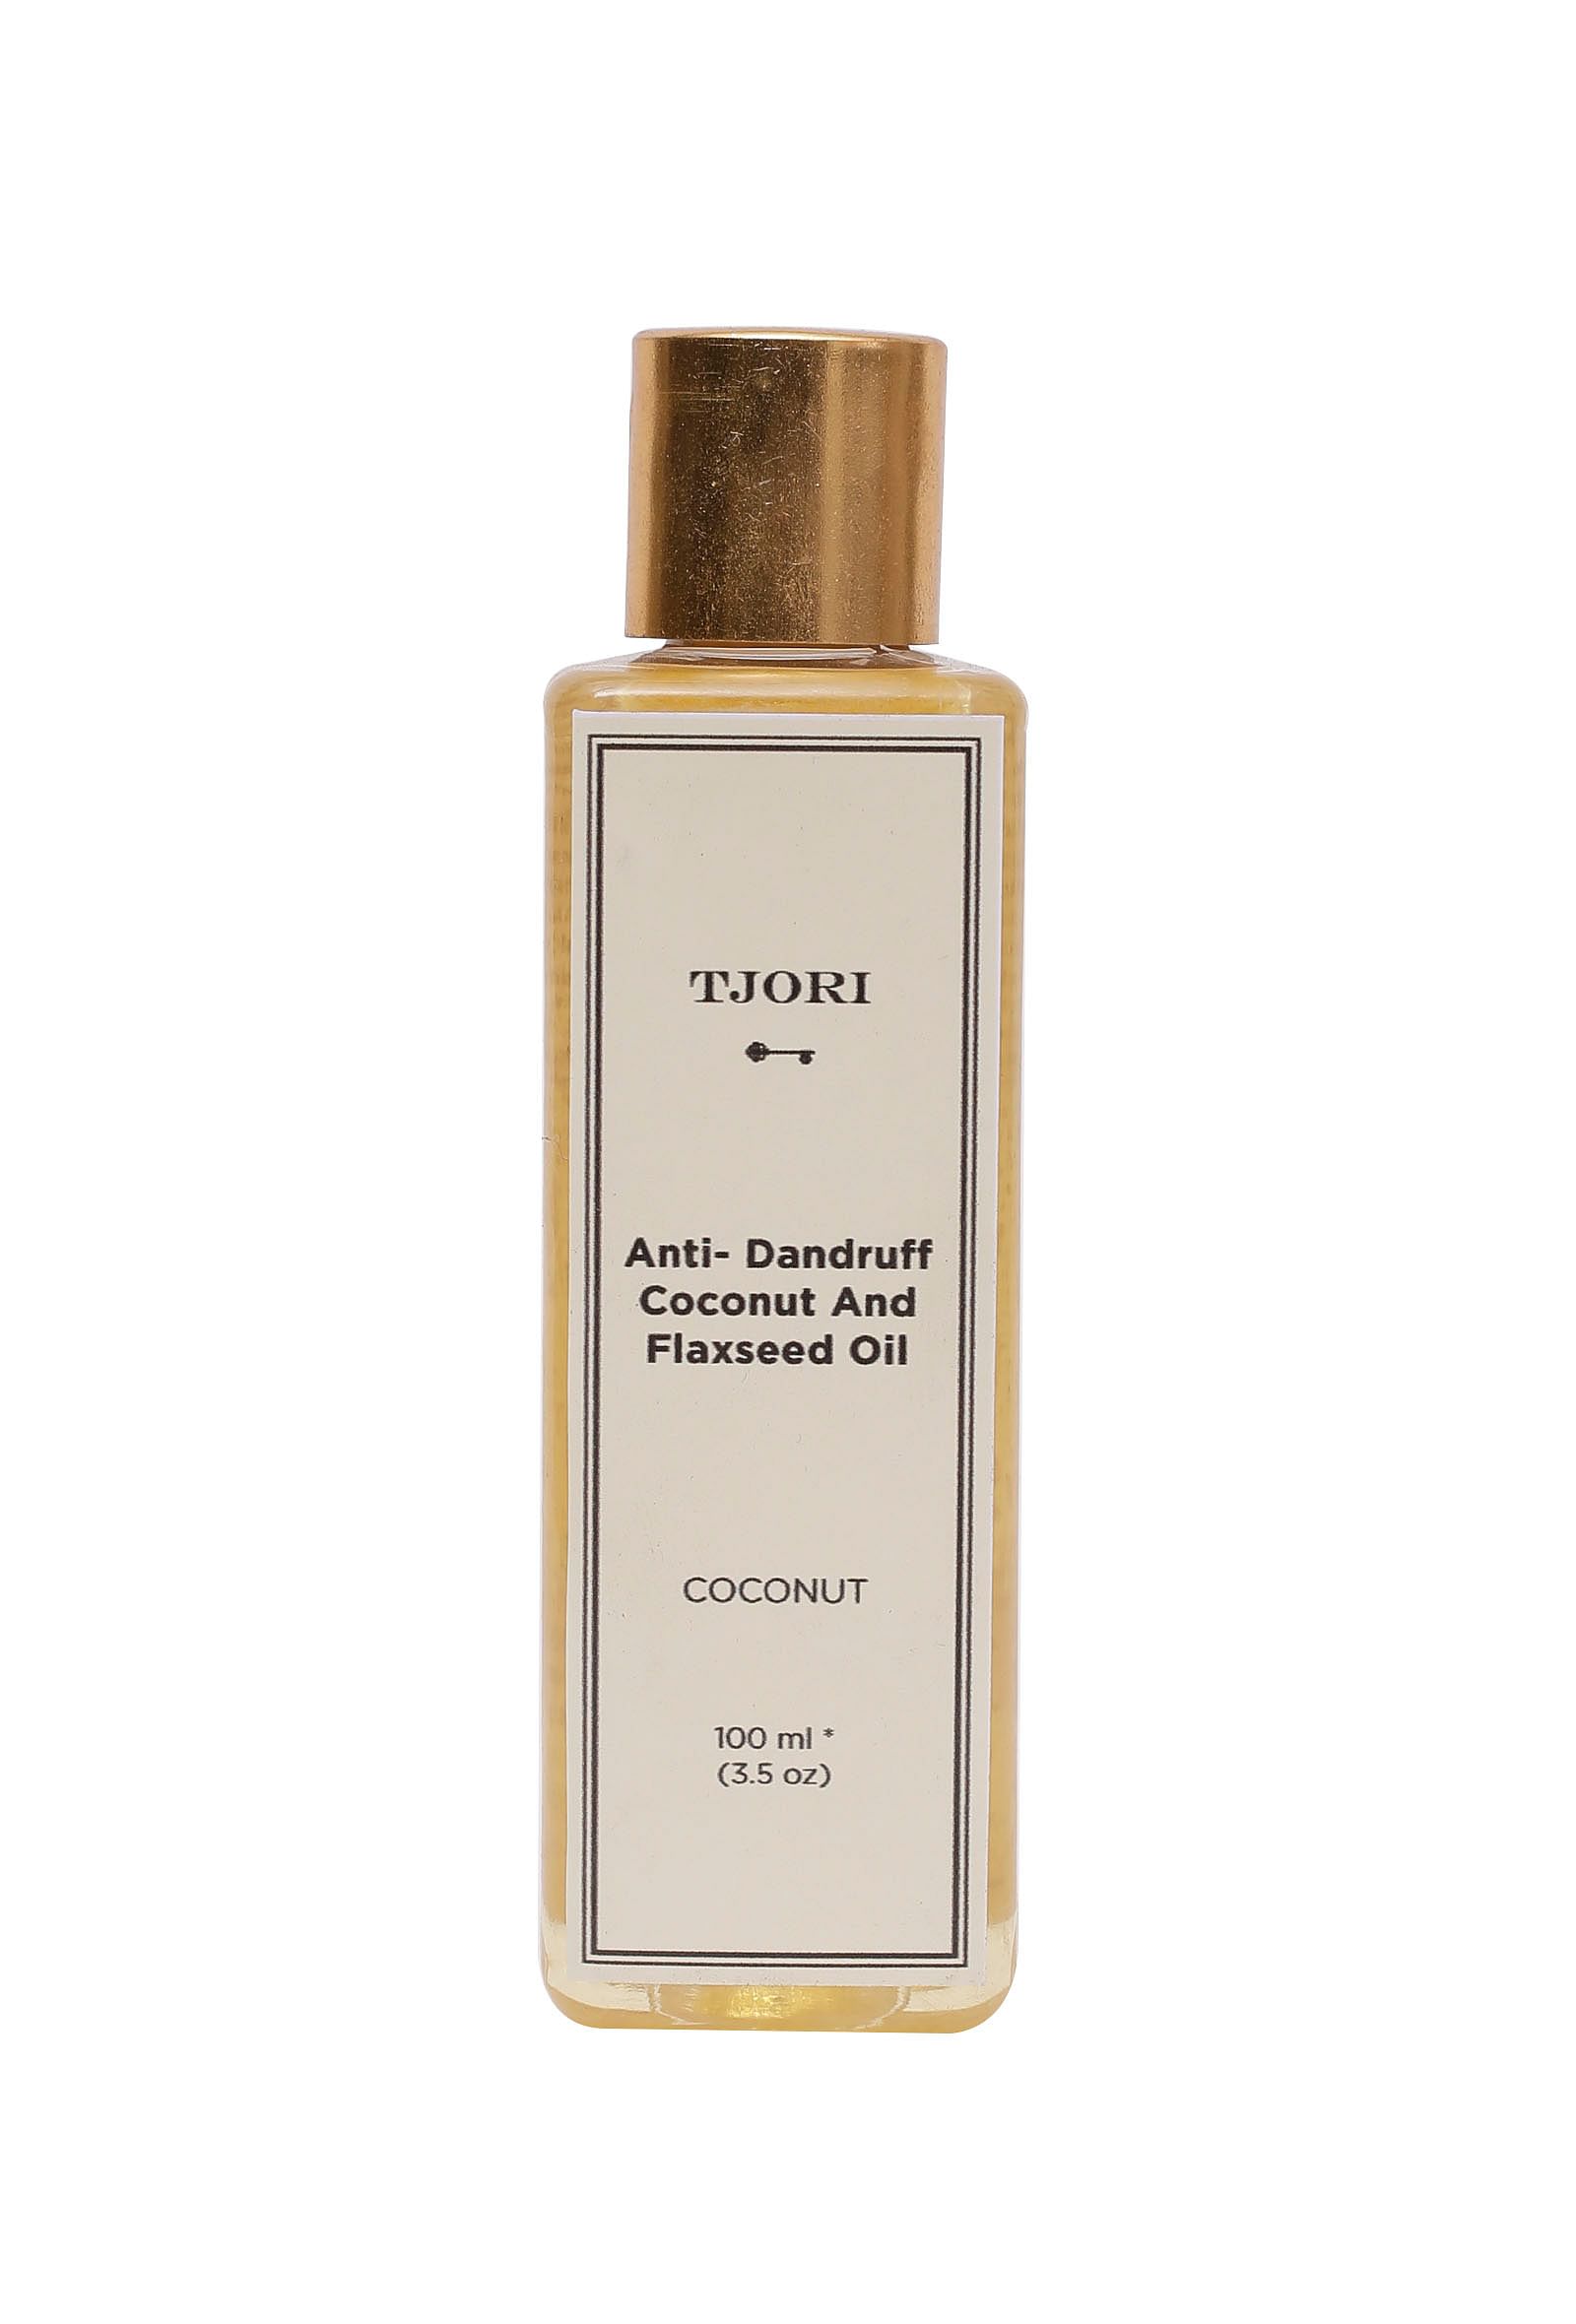 Anti- Dandruff Coconut and Flaxseed oil